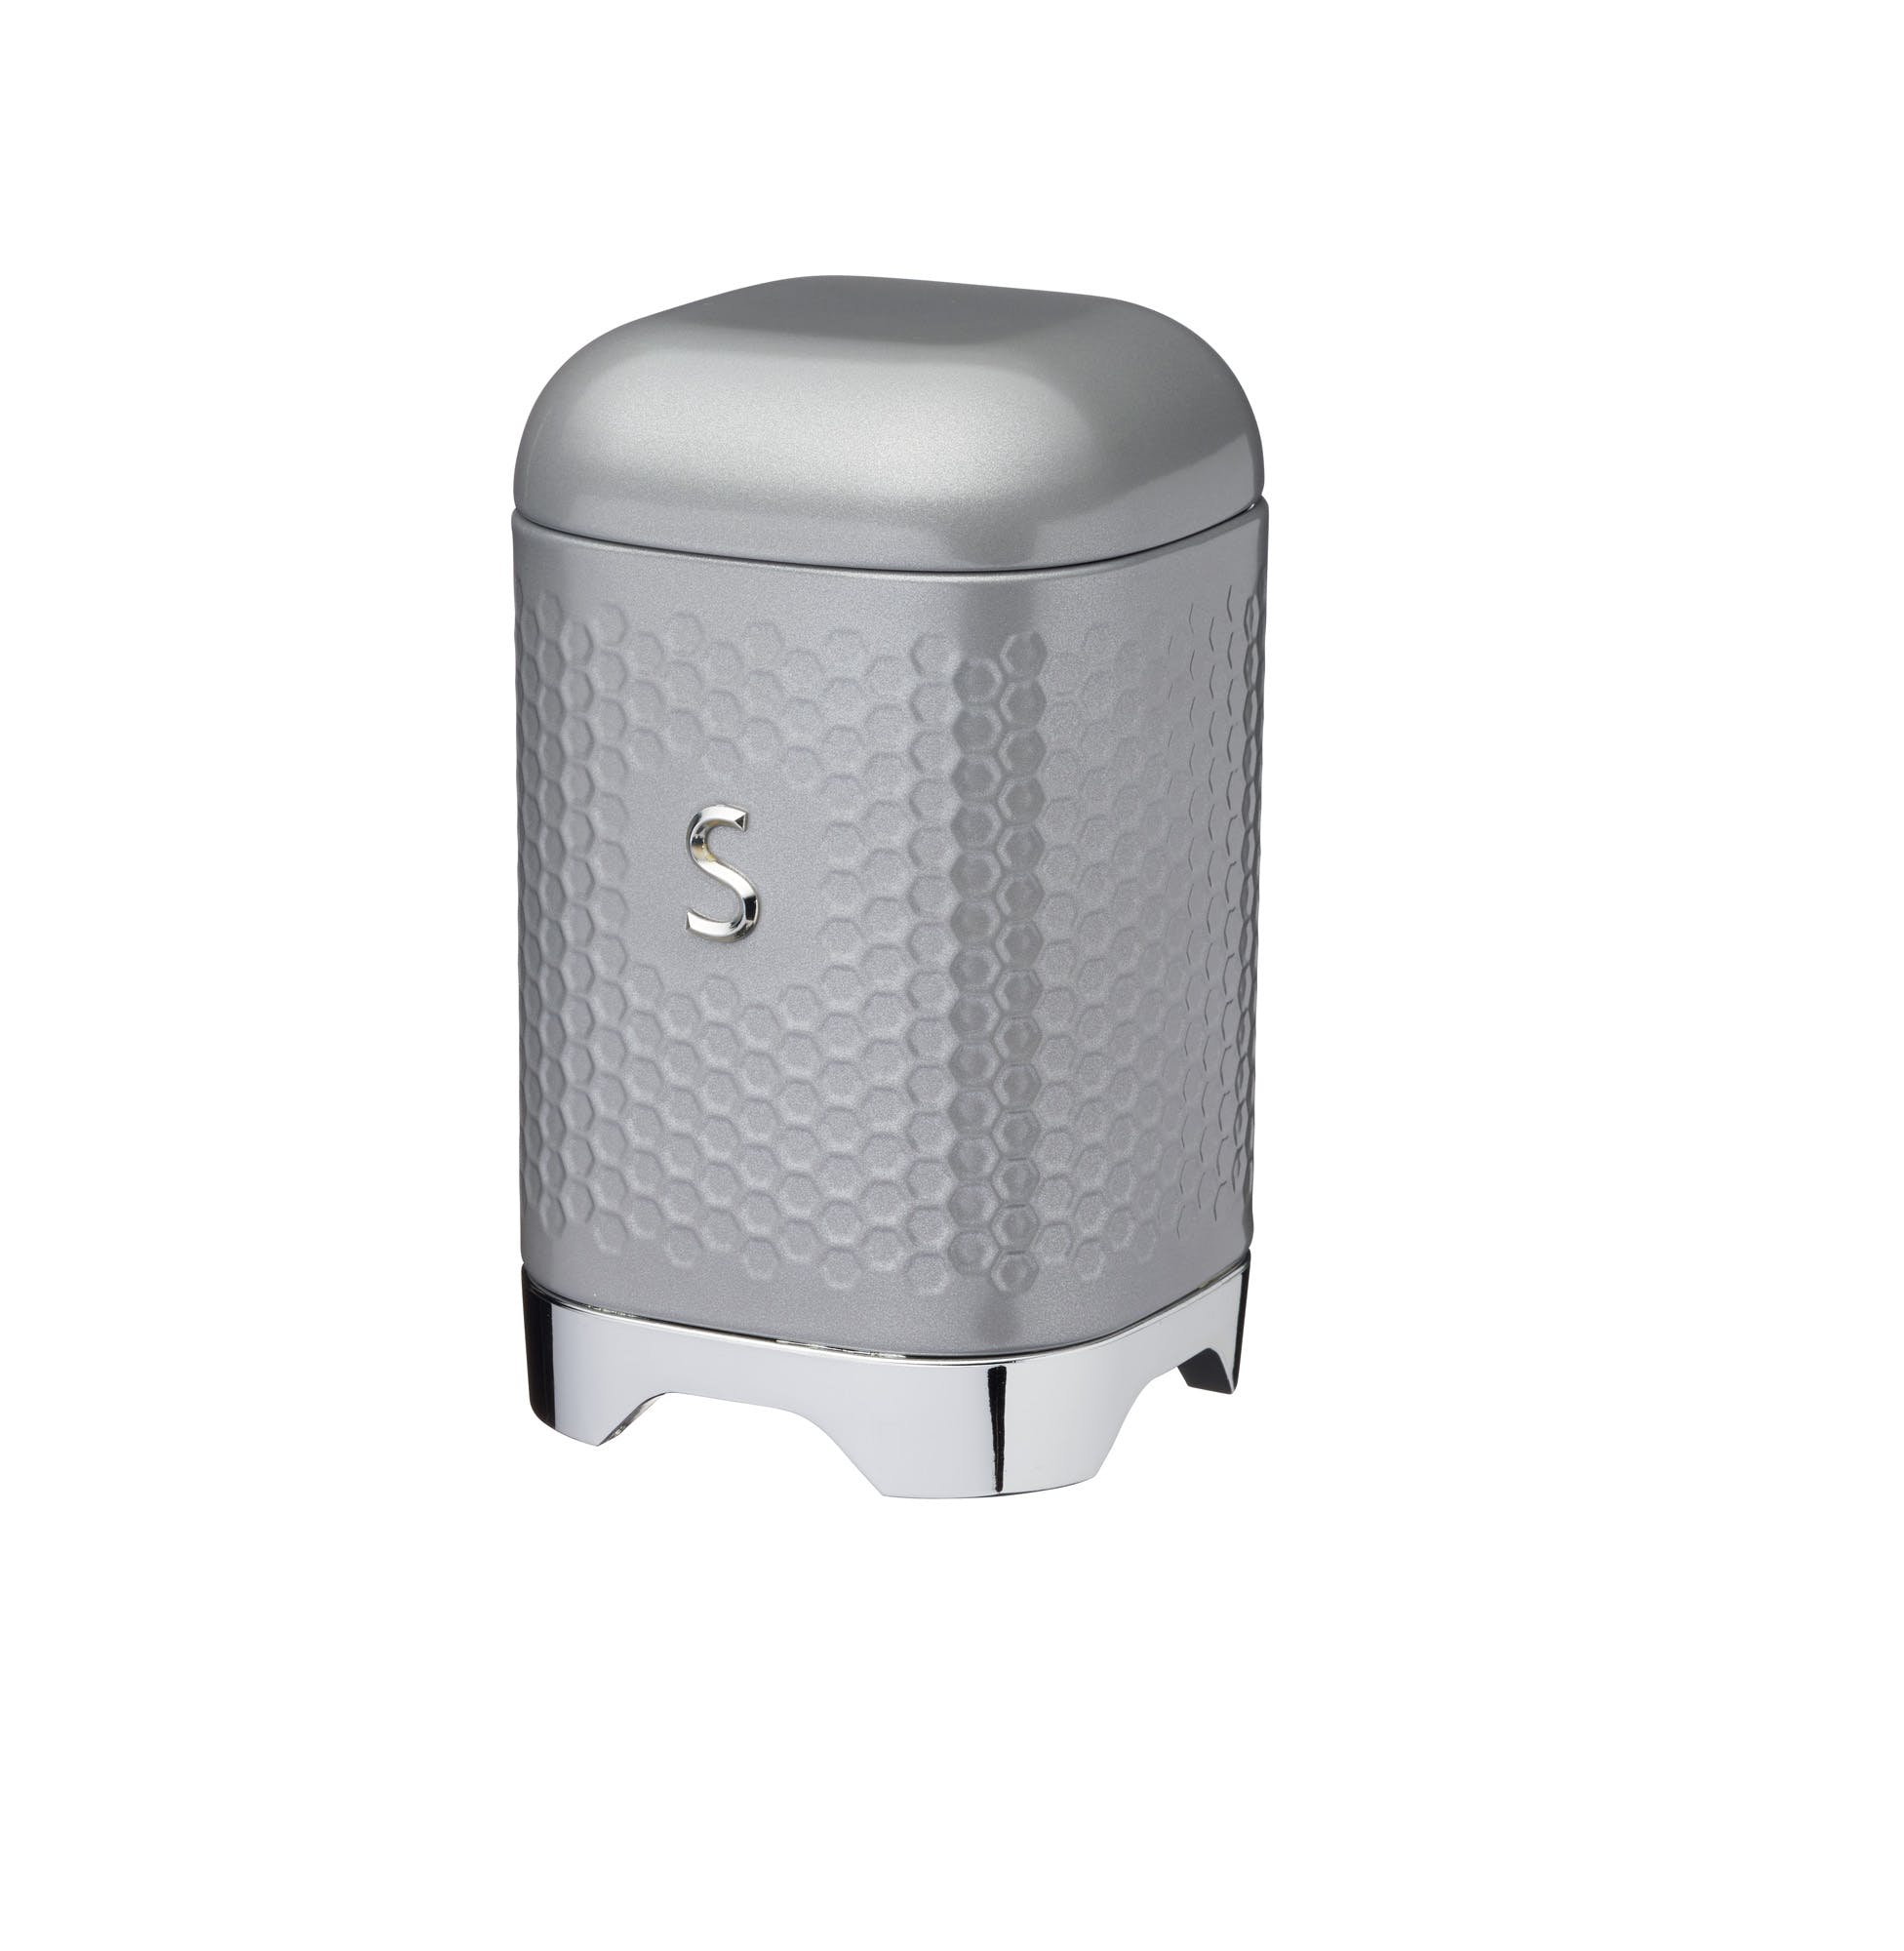 Lovello Retro Sugar Jar with Geometric Textured Finish - Shadow Grey - The Cooks Cupboard Ltd